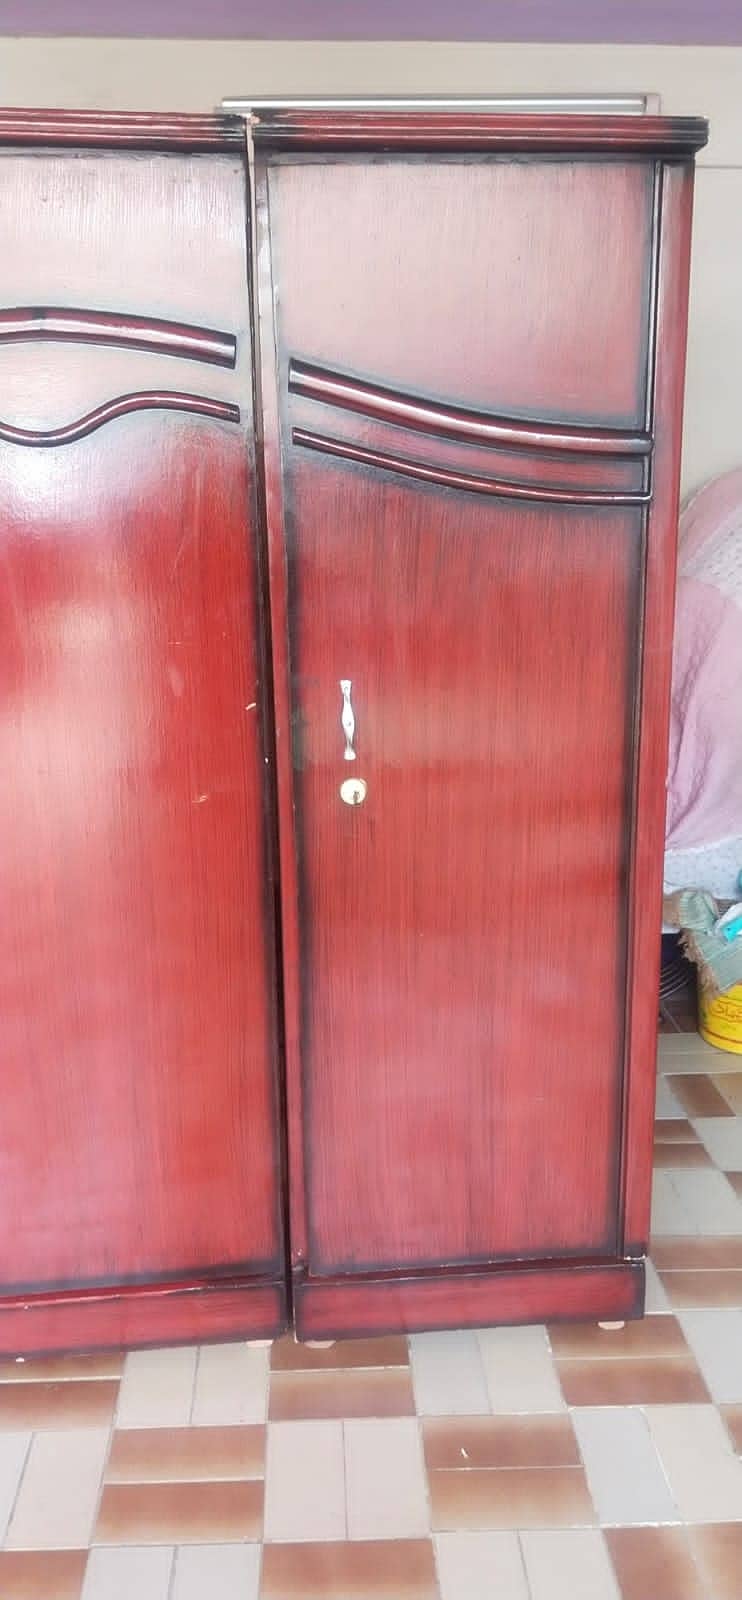 3door wardrobe for sale in excellent condition 1